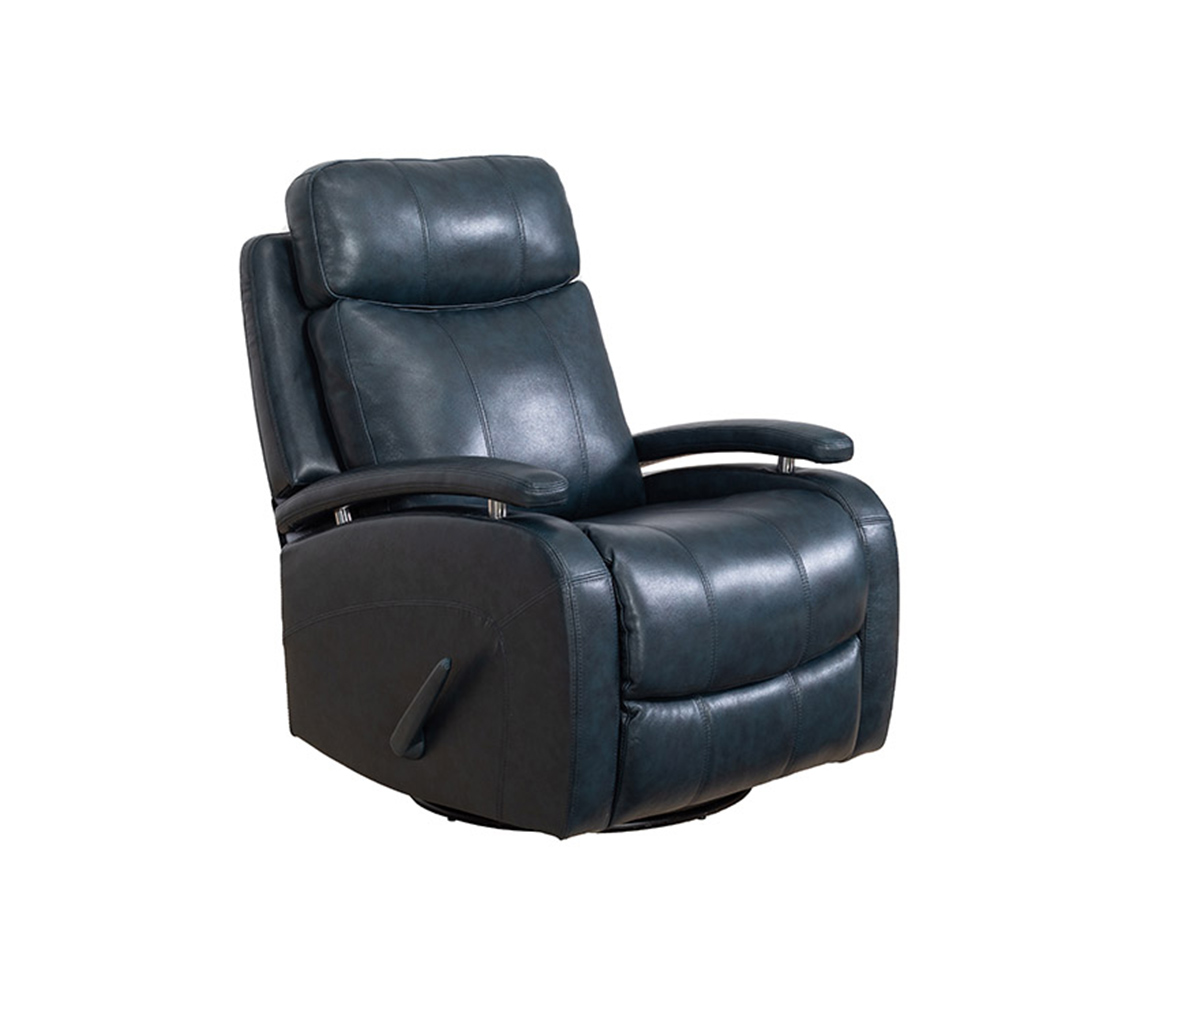 Barcalounger Duffy Swivel Glider Recliner Chair - Ryegate Sapphire Blue/Leather Match